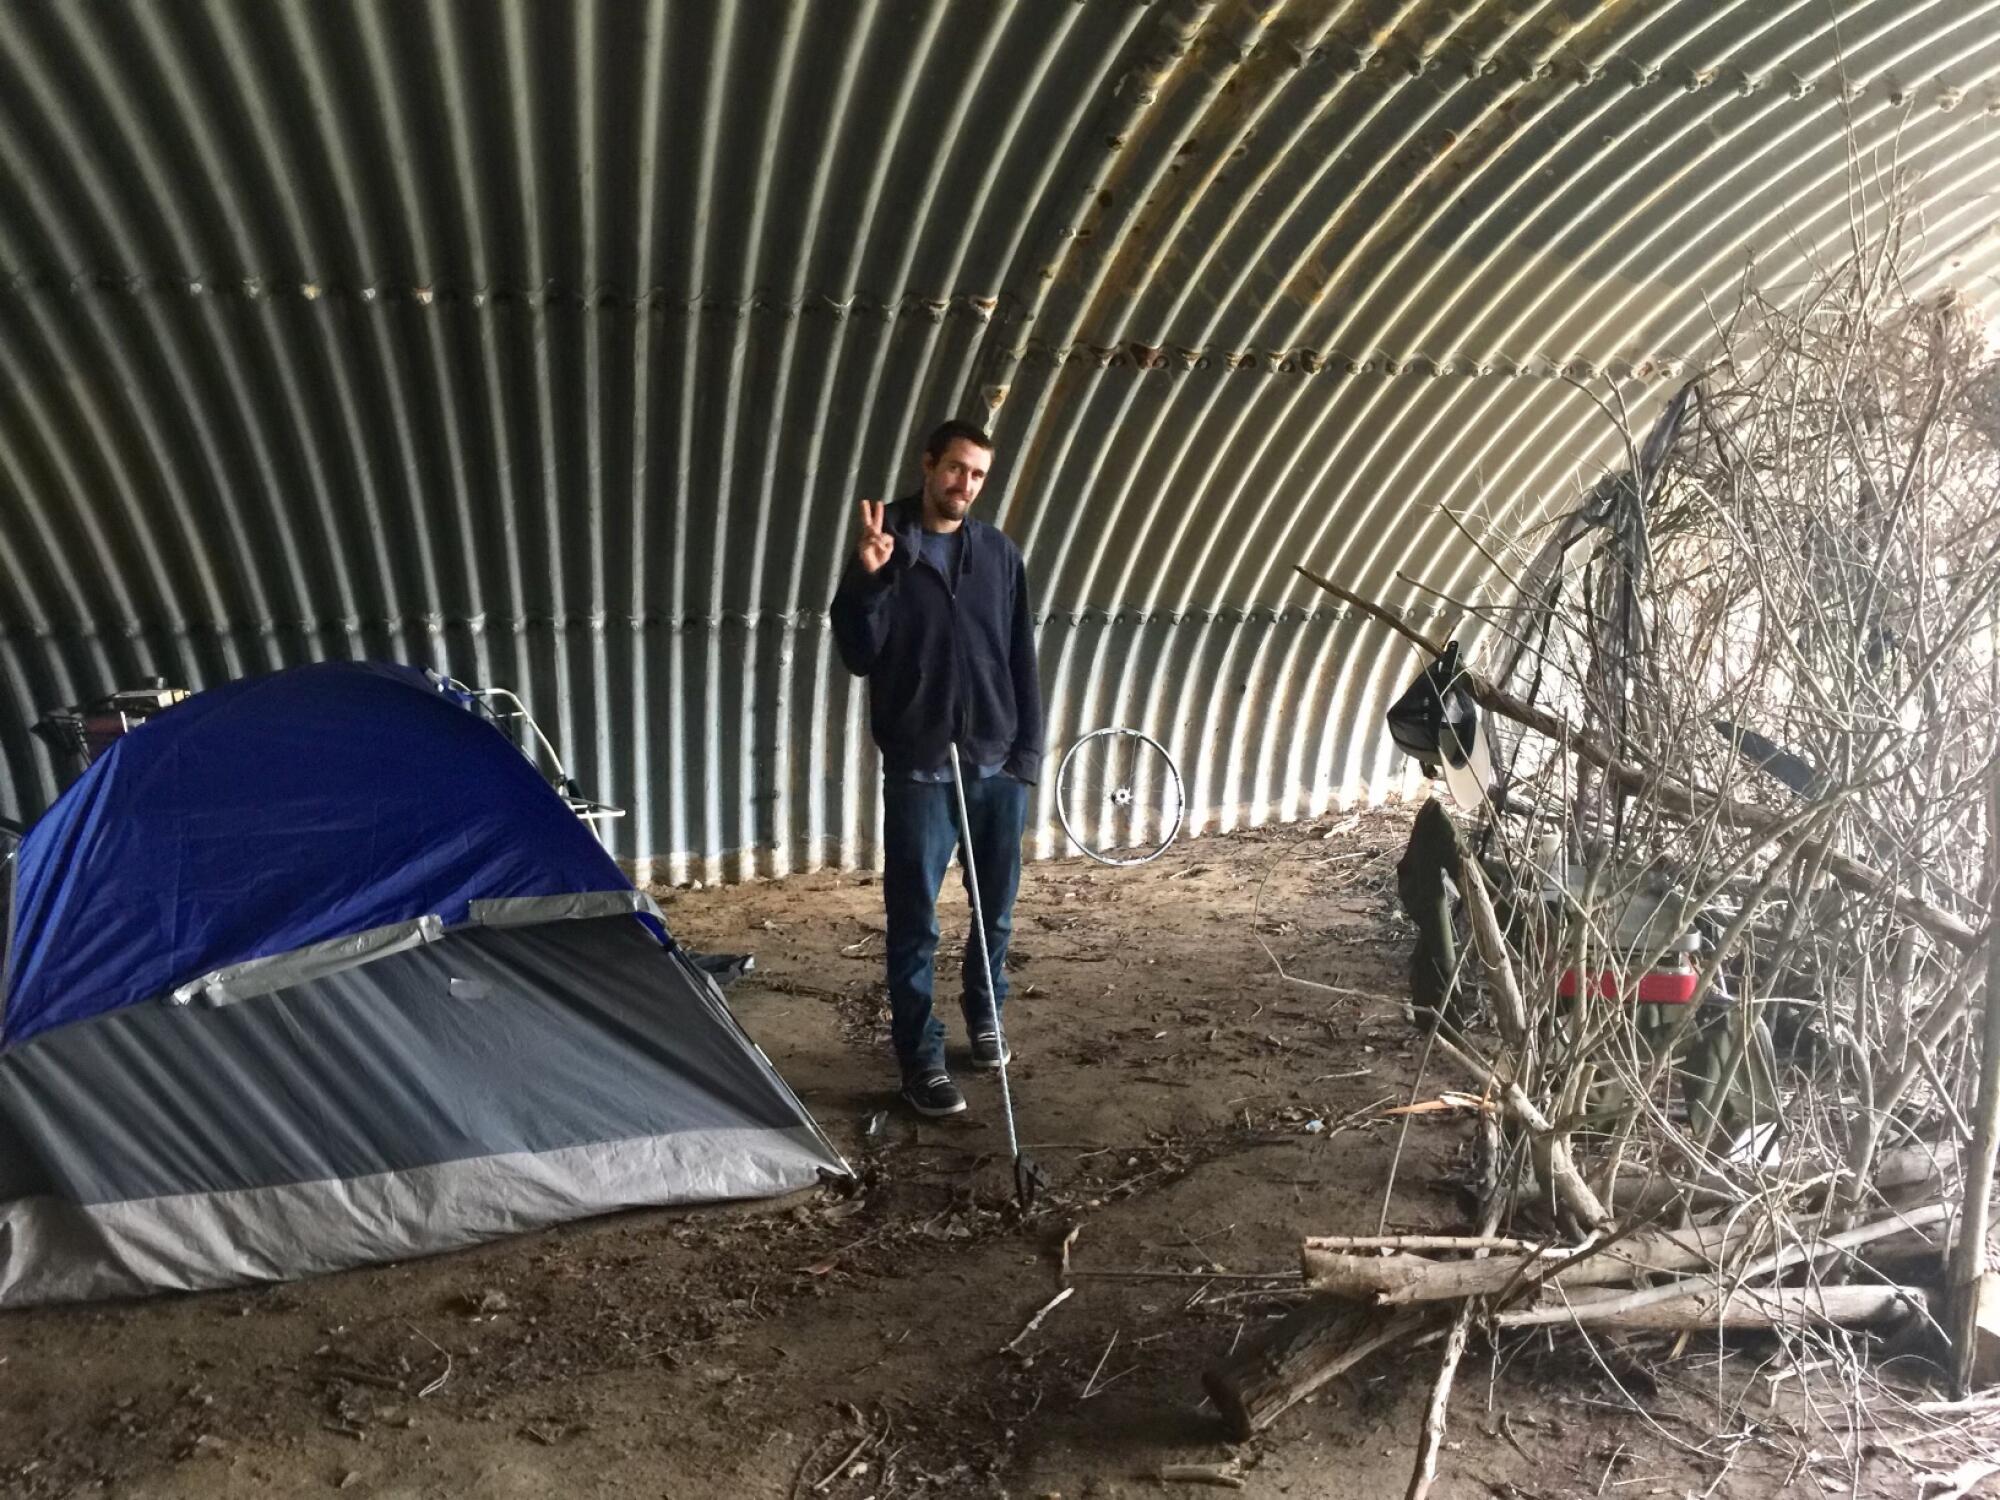 Luke Locatell next to his tent in Encinitas.